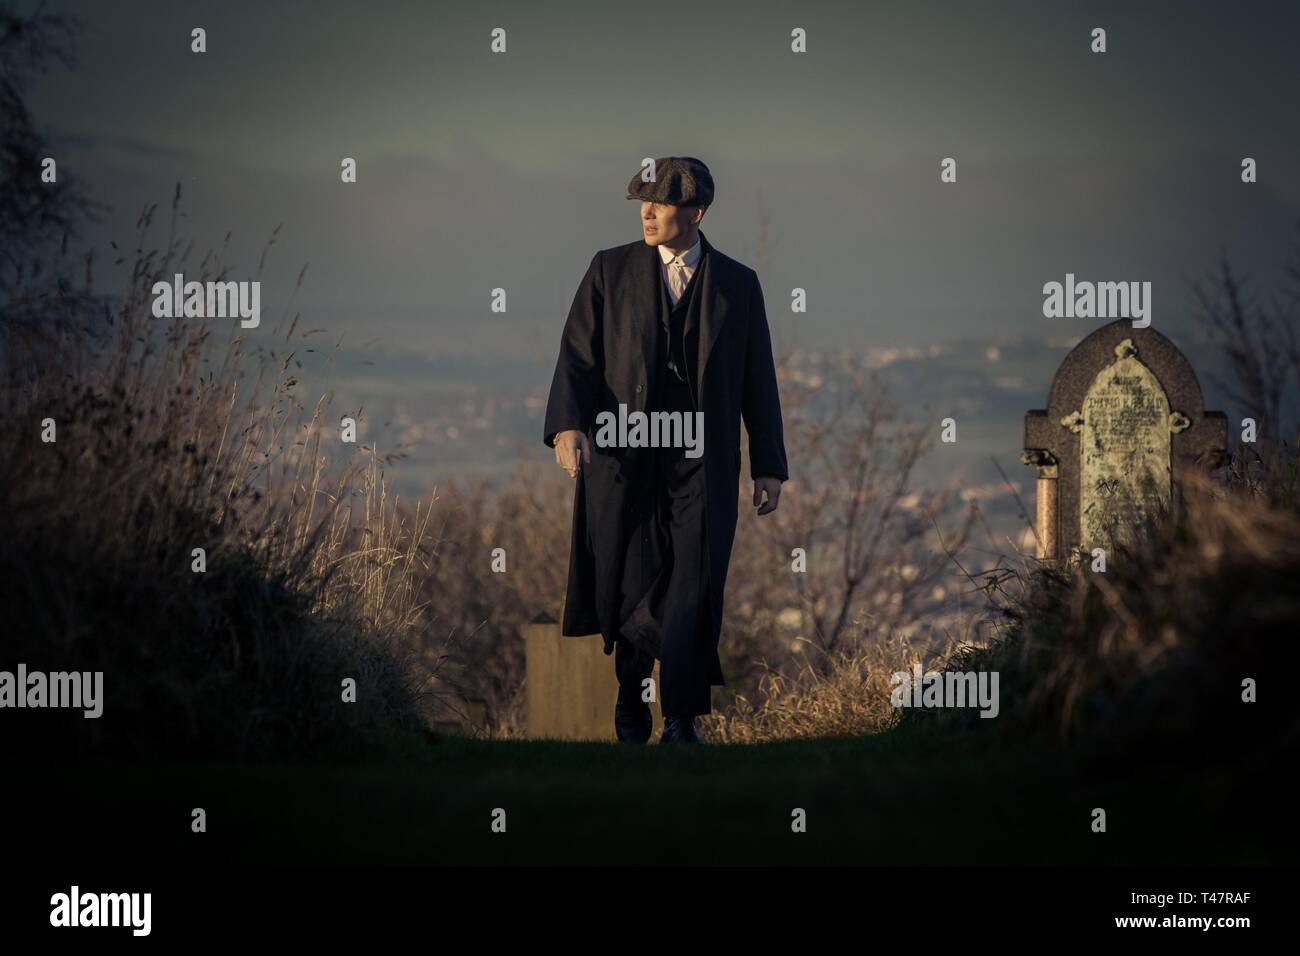 CILLIAN MURPHY in PEAKY BLINDERS (2013). Season 1 Episode 5. Credit: BRITISH BROADCASTING CORPORATION (bbc) / Album Stock Photo